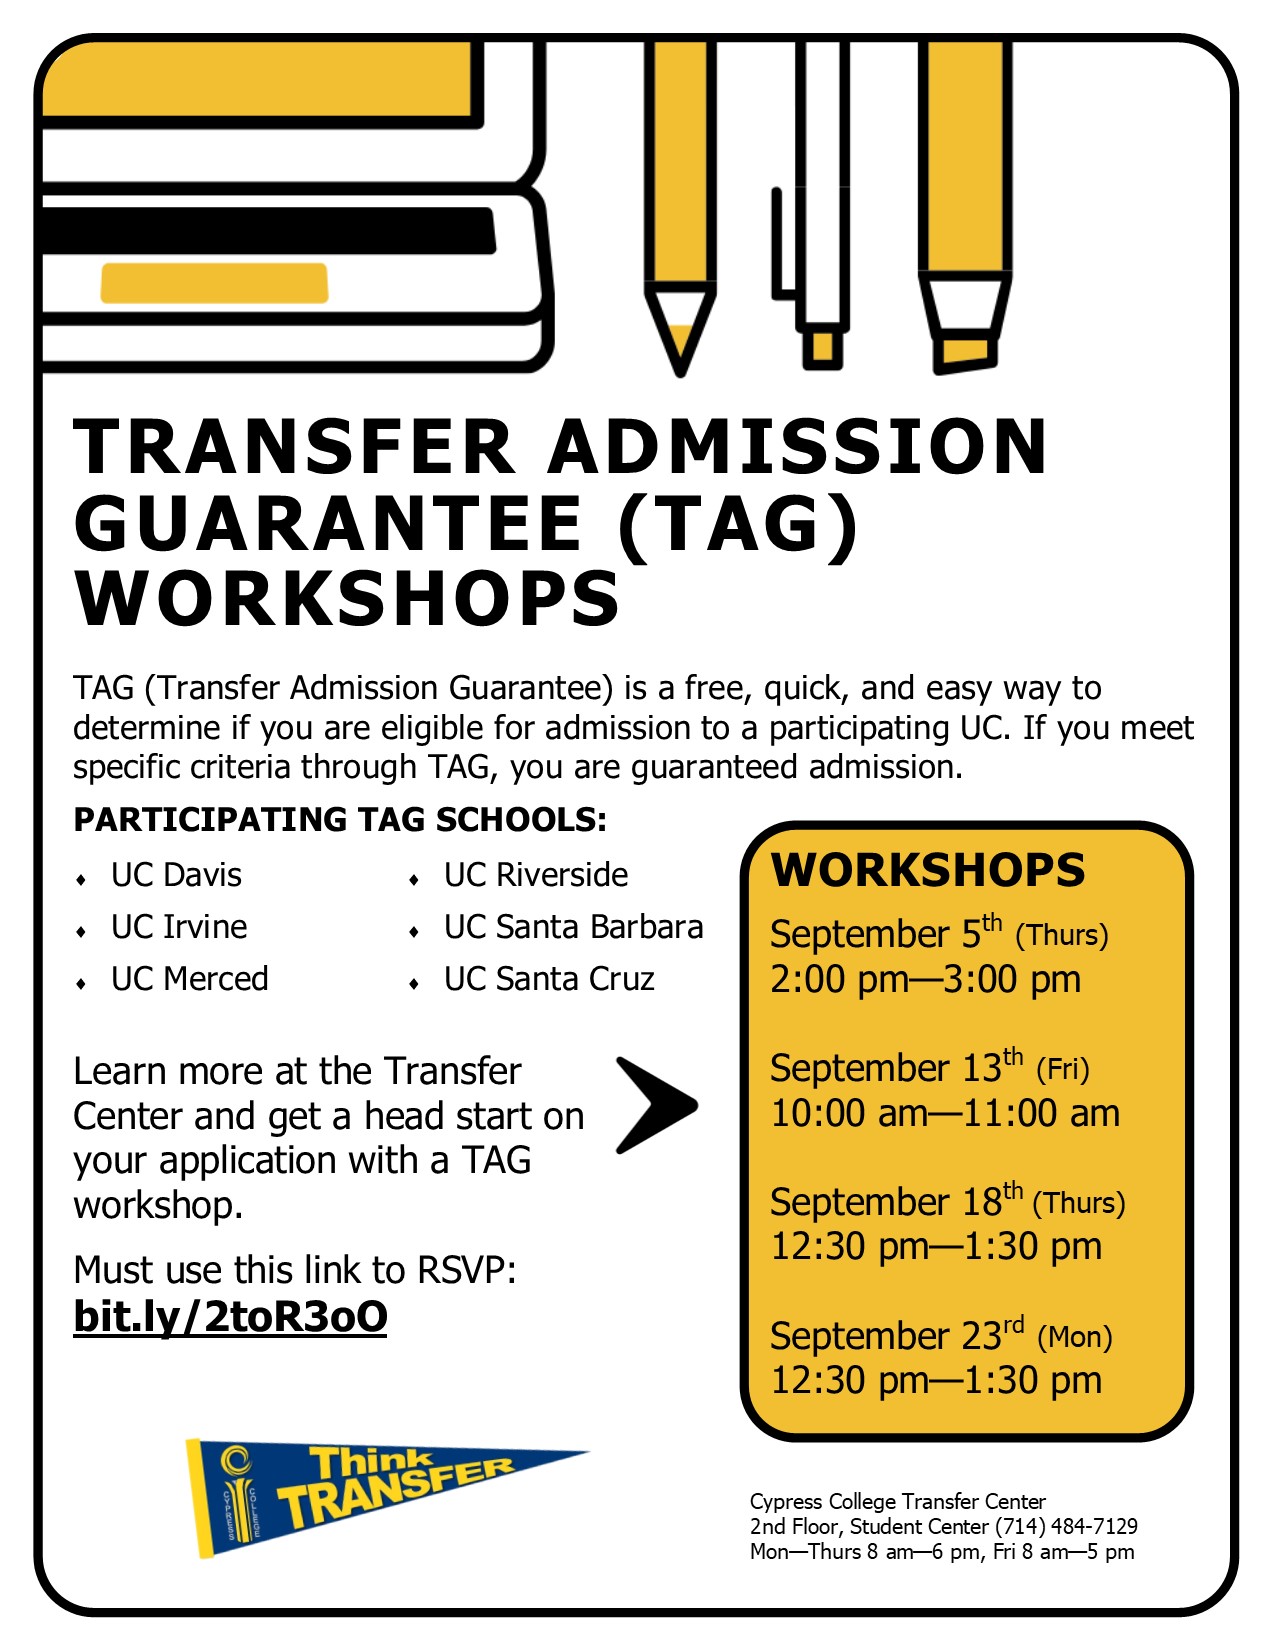 Flyer for Transfer Admission Guarantee Workshops